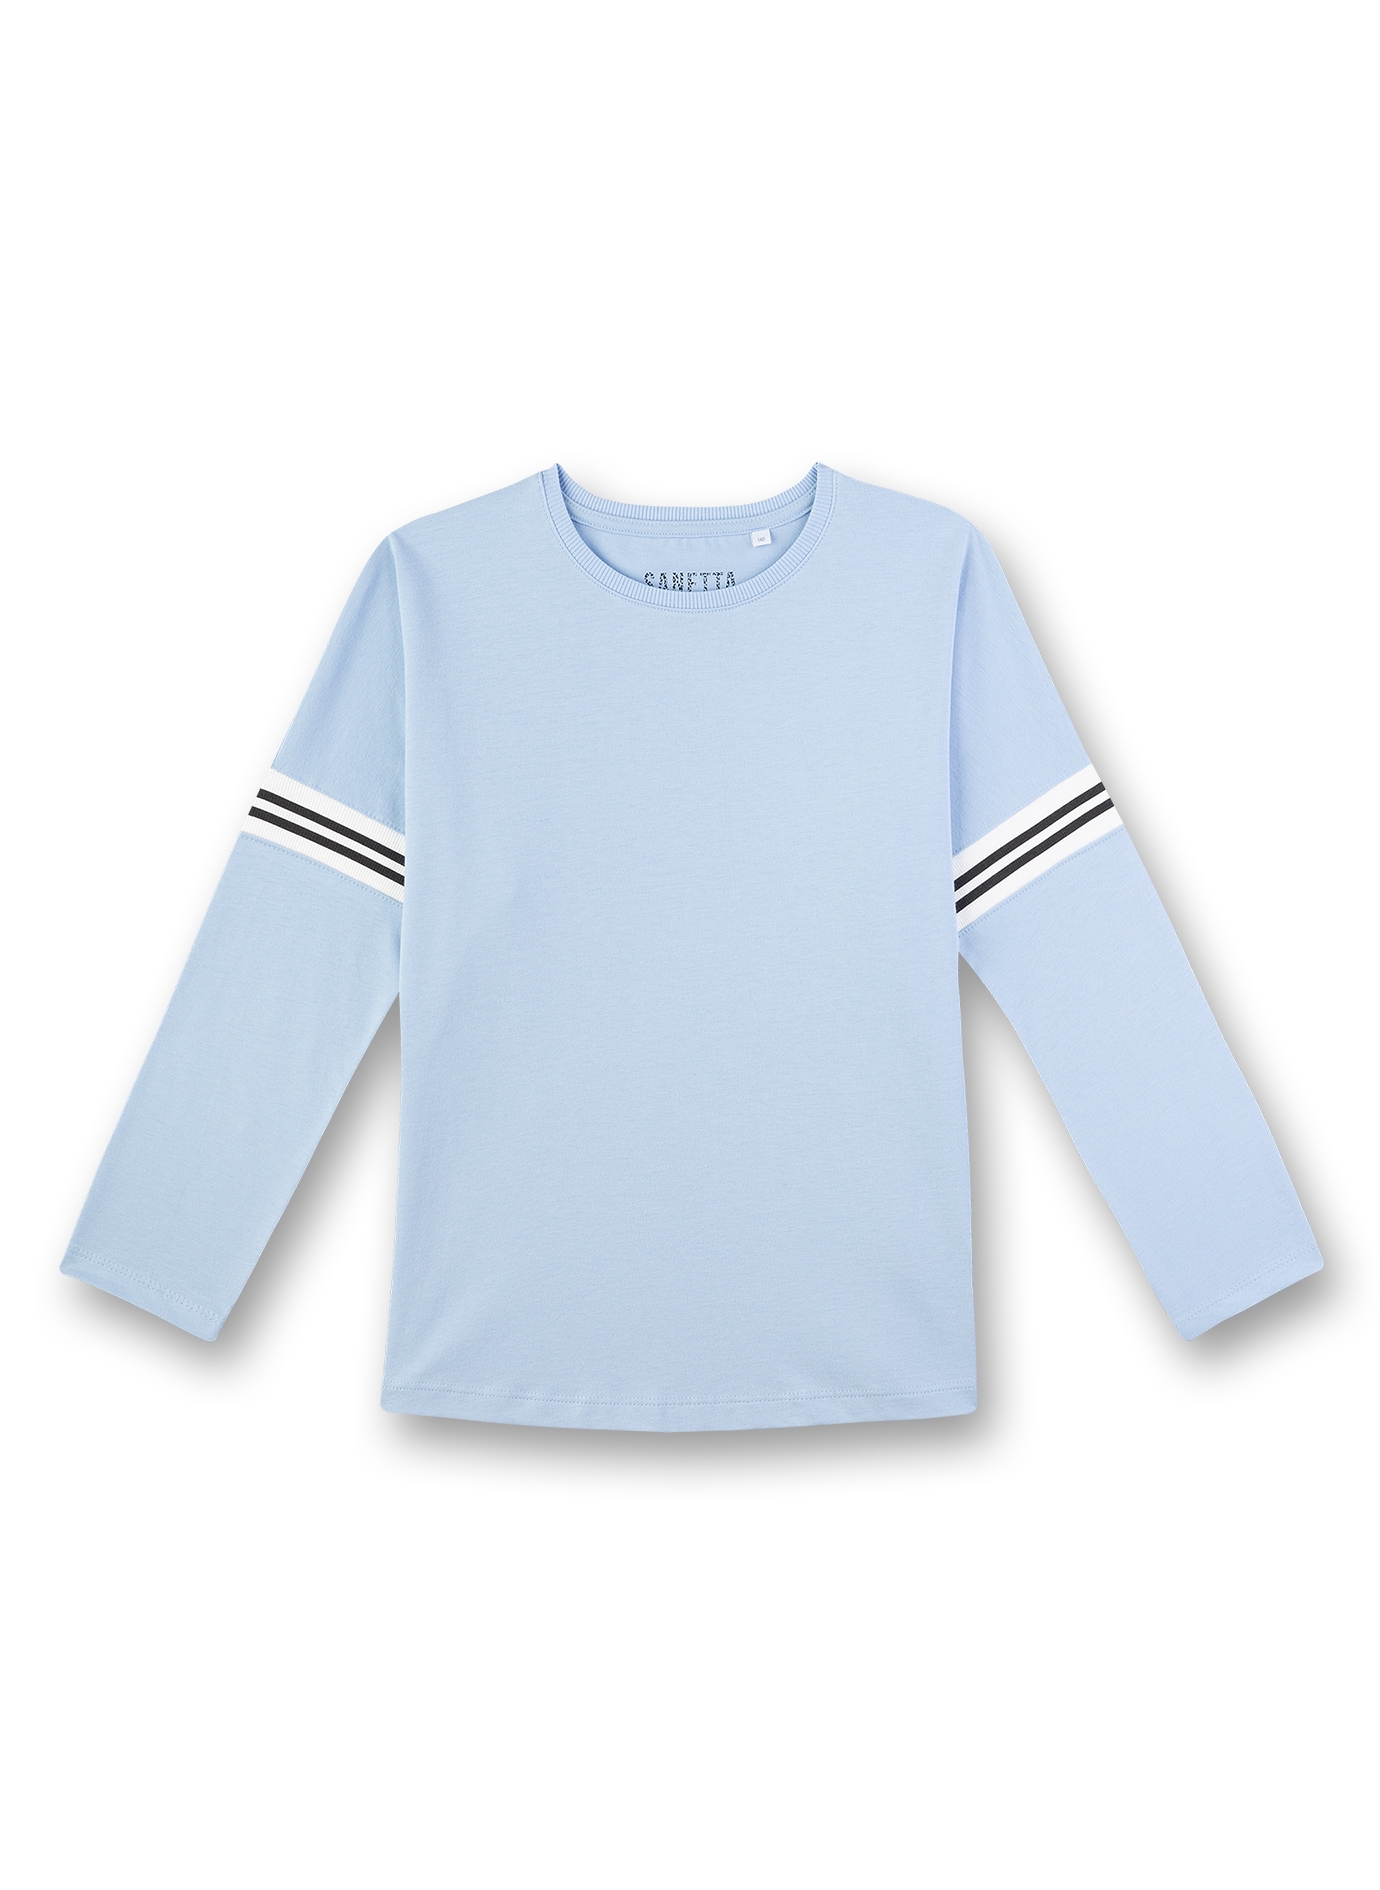 Mädchen-Shirt langarm Hellblau Athleisure